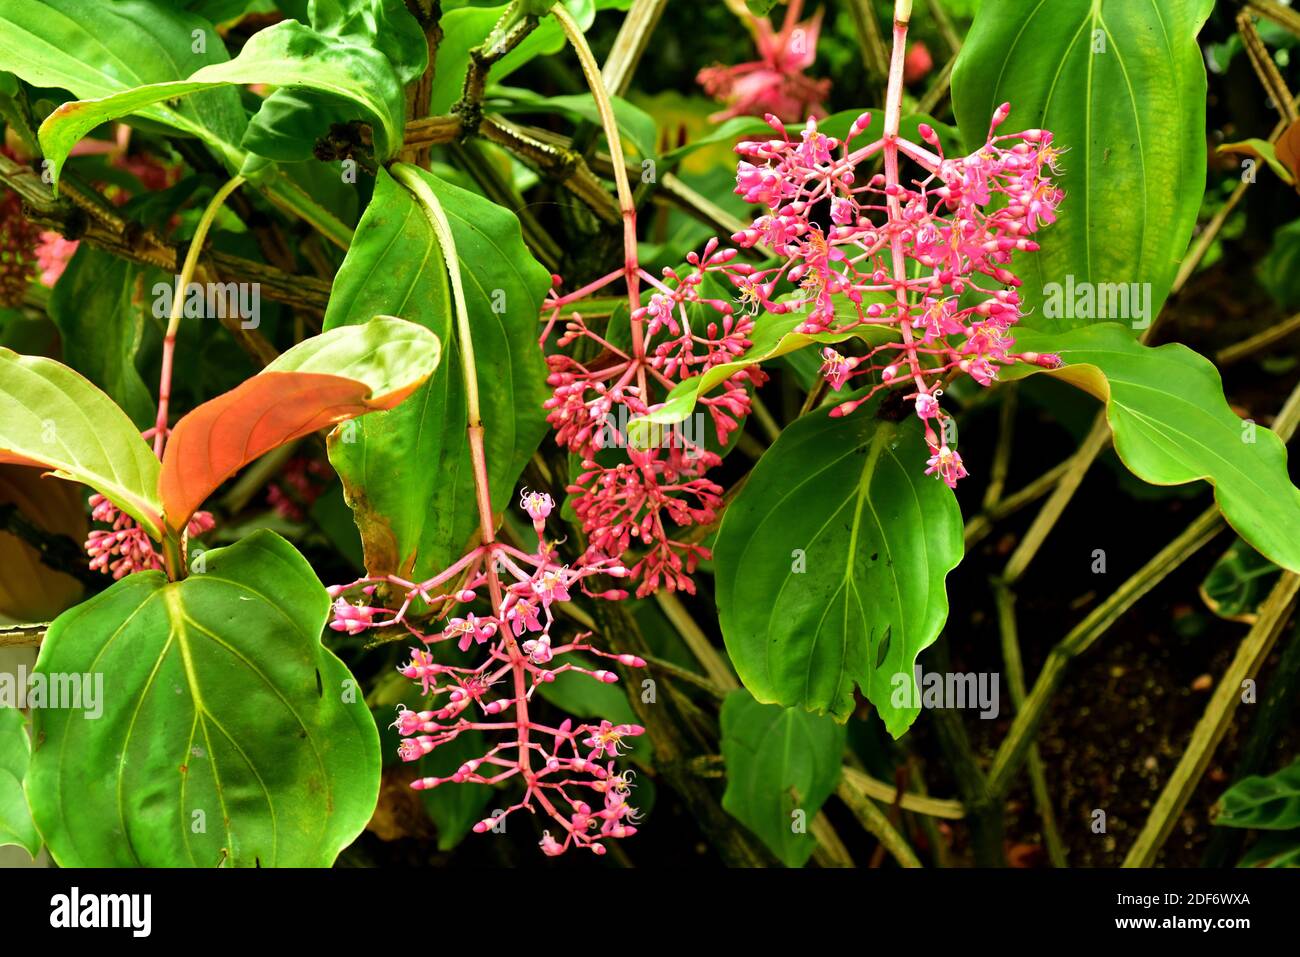 La uva rosa o la llamativa medinilla (Medinilla magnifica) es una planta epífita nativa de Filipinas. Planta floreciente. Foto de stock